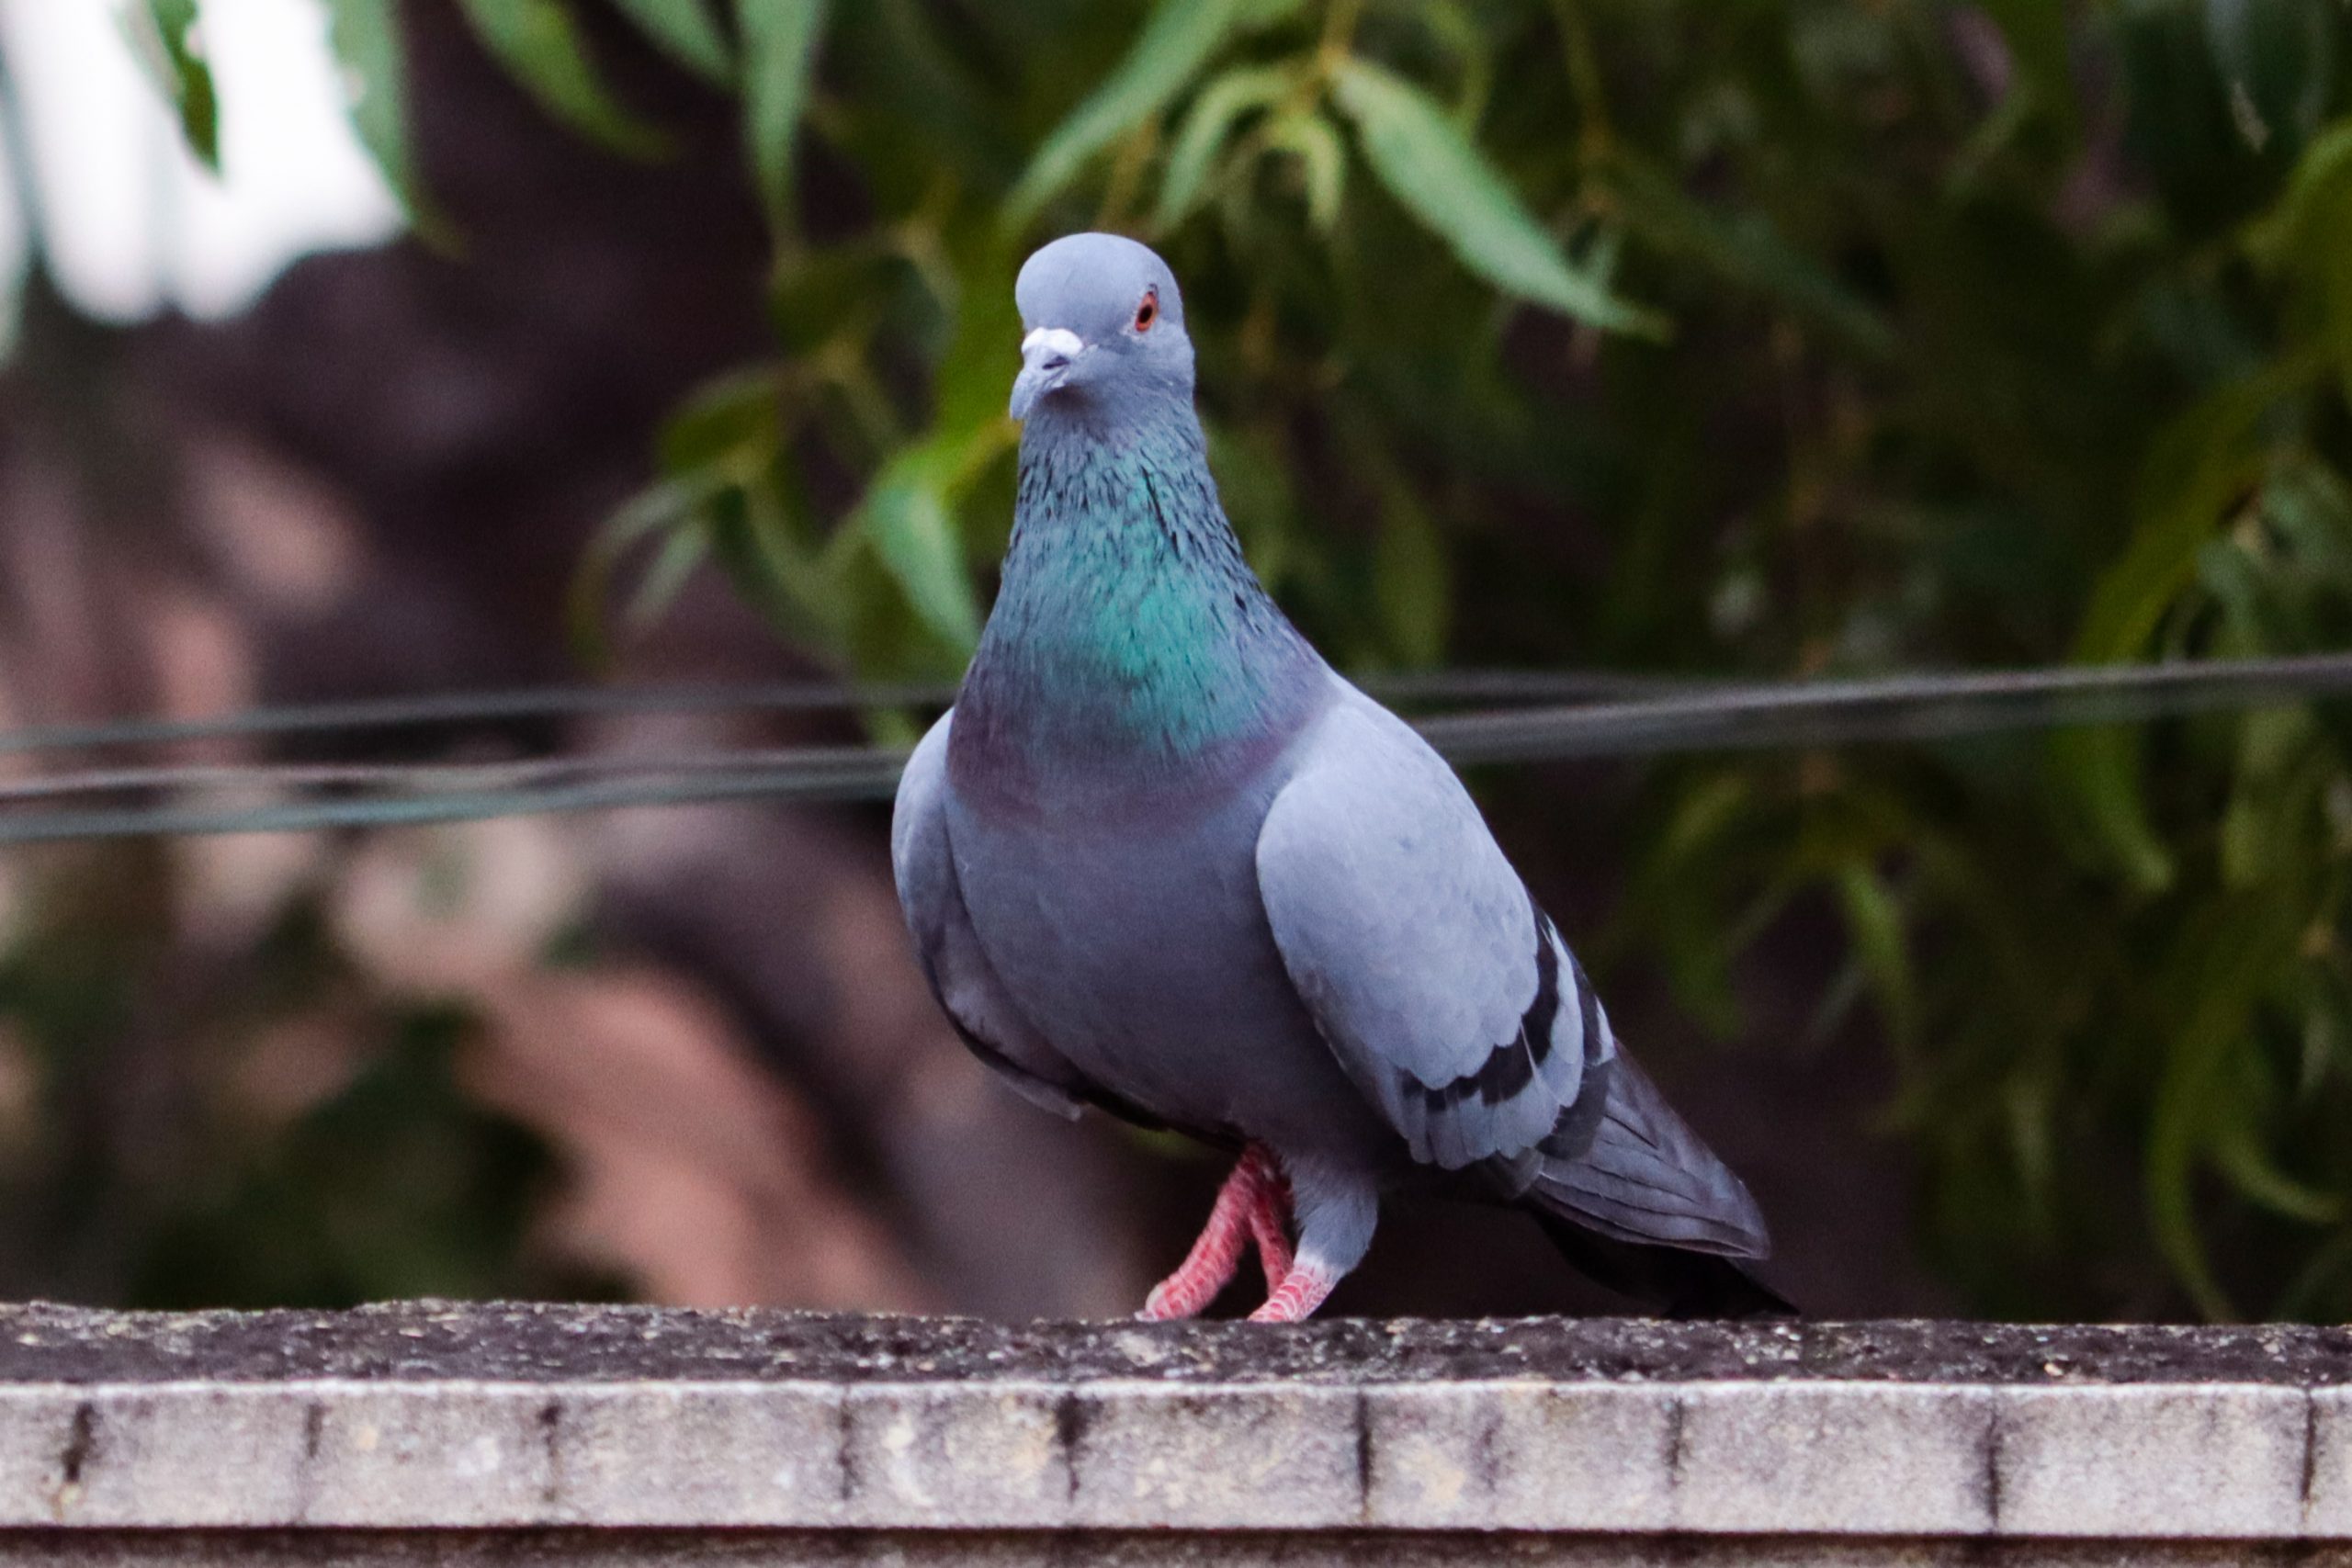 a sitting pigeon